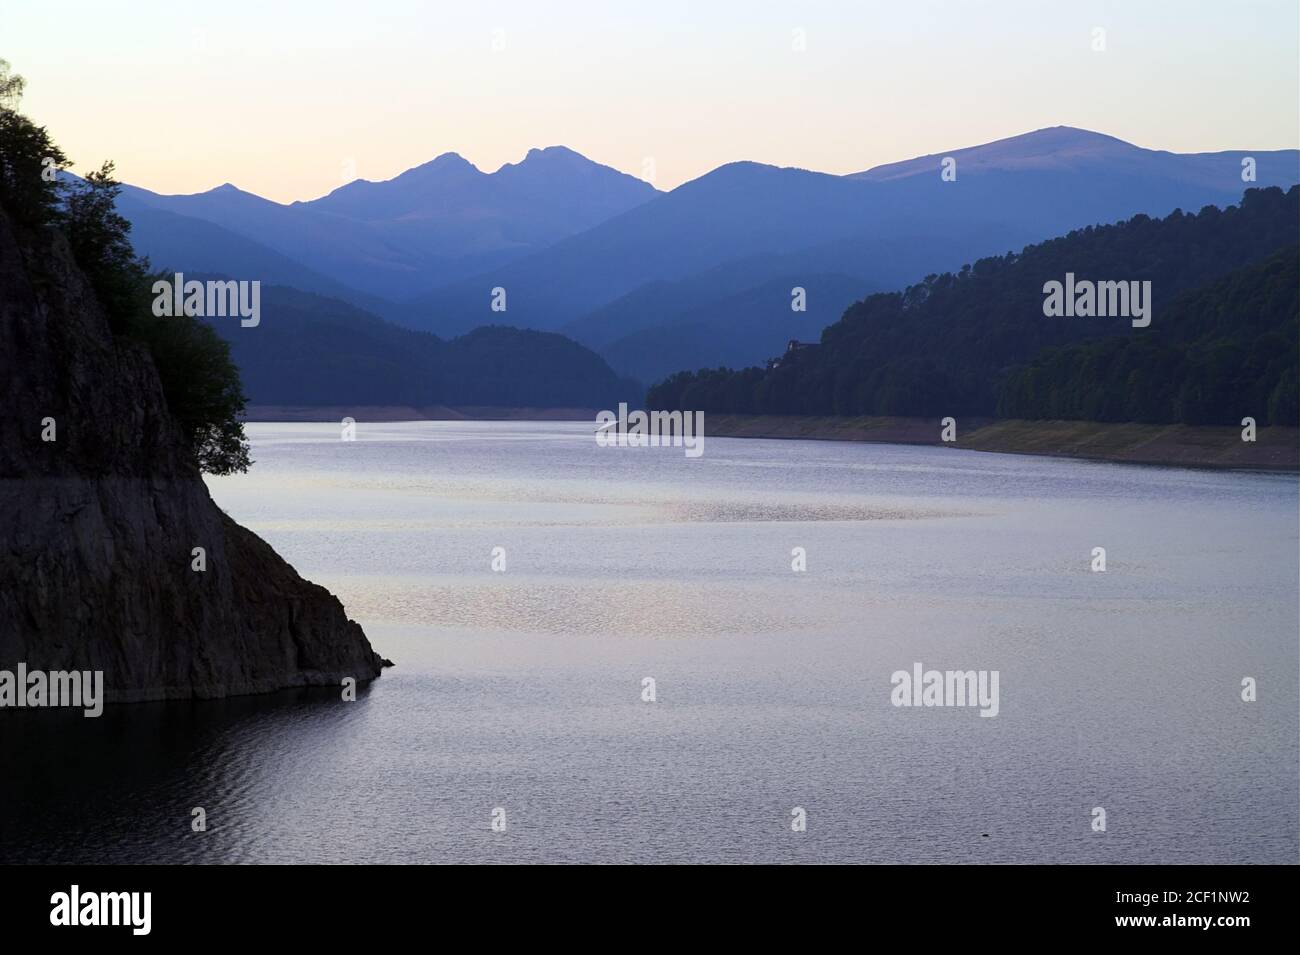 Romania, Carpathians, hills above the lake at sunset. Rumänien, Karpaten, Hügel über dem See bei Sonnenuntergang. Wzgórza o zachodzie słońca. Stock Photo